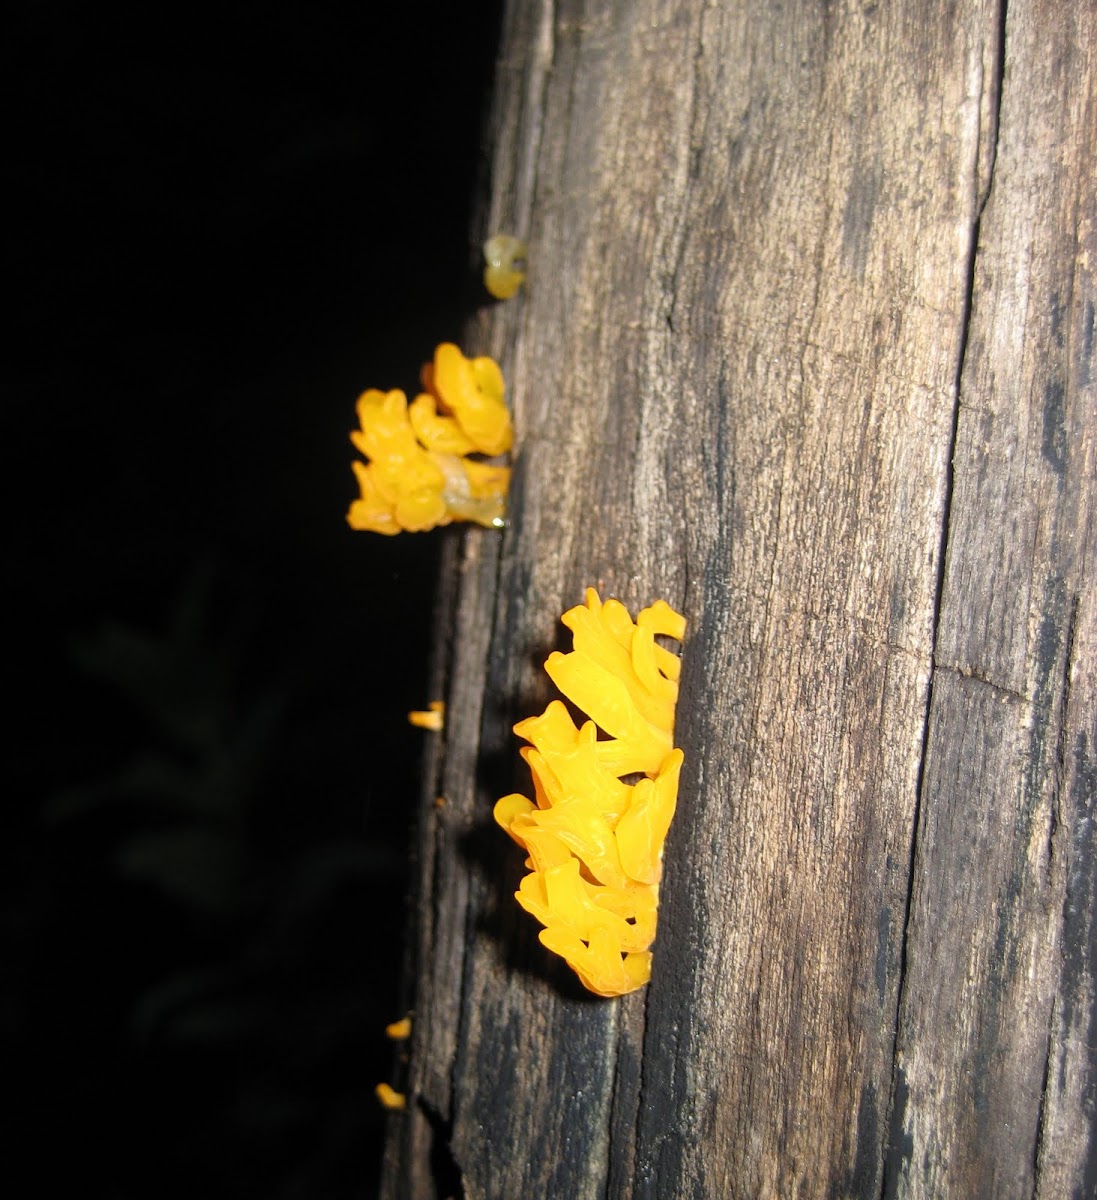 Yellow mushroom or Jelly fungus